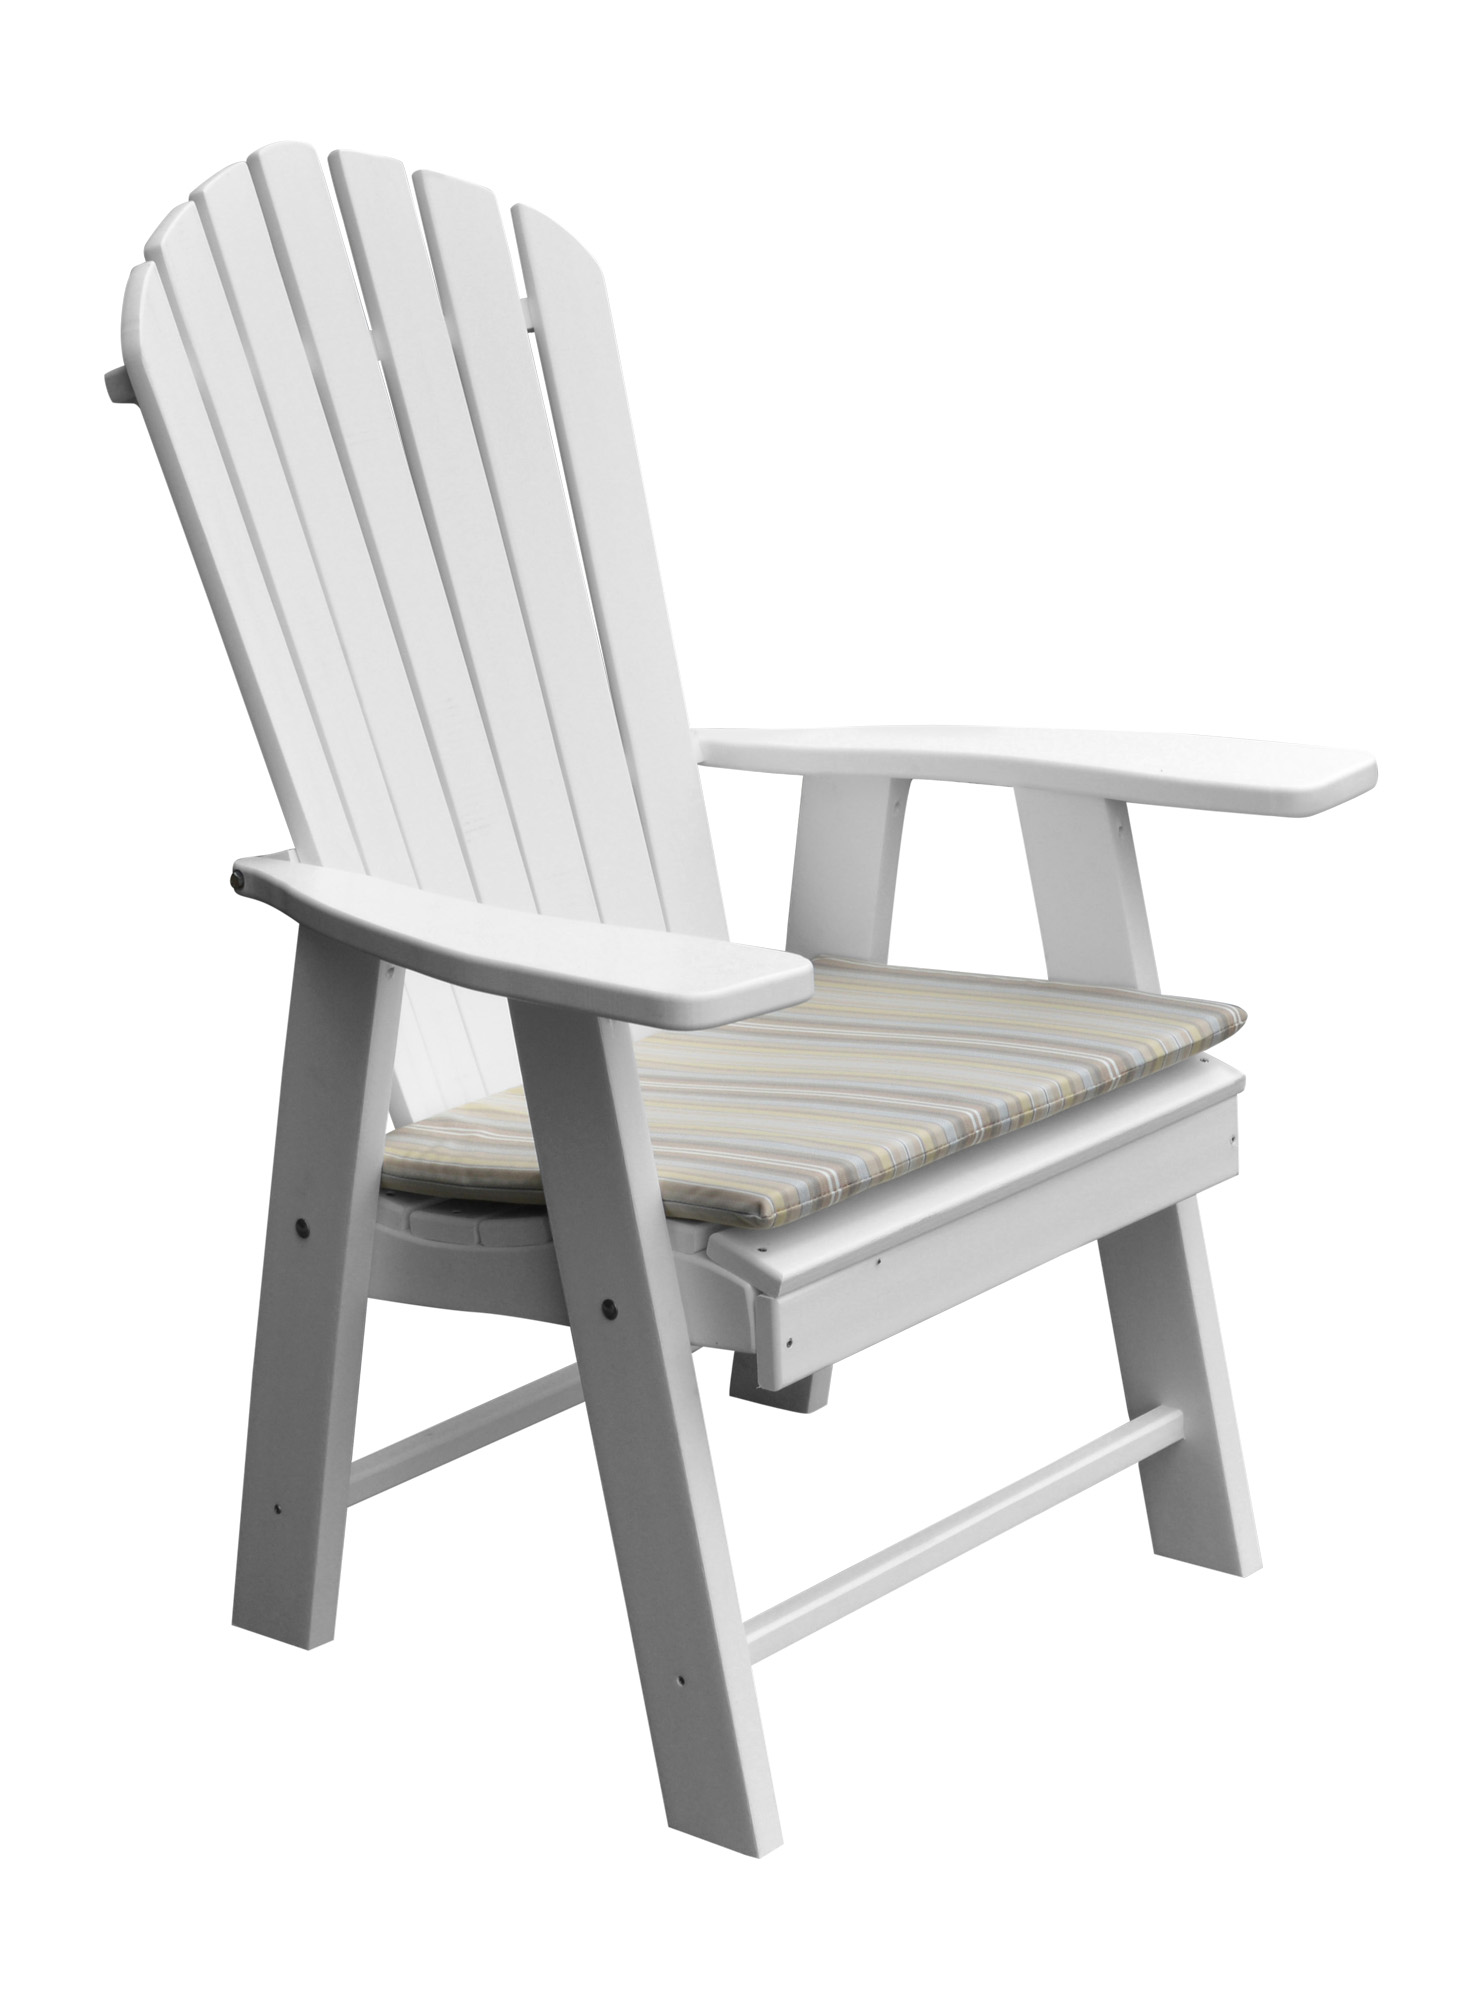 Item 882 Poly Upright Adirondack Chair White W 1012 Seat Cushion 